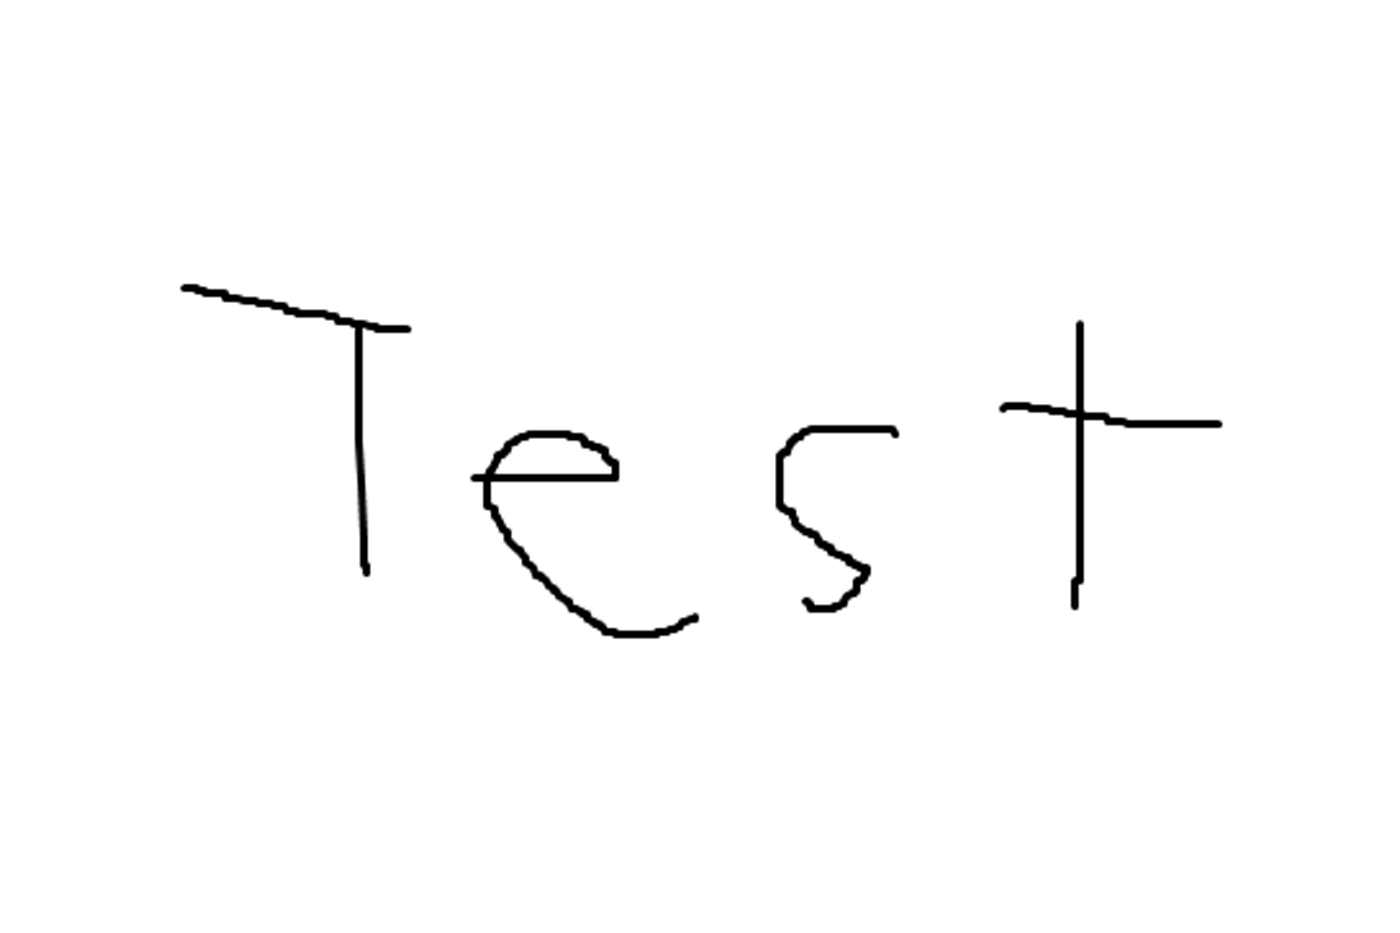 test drawing NFT